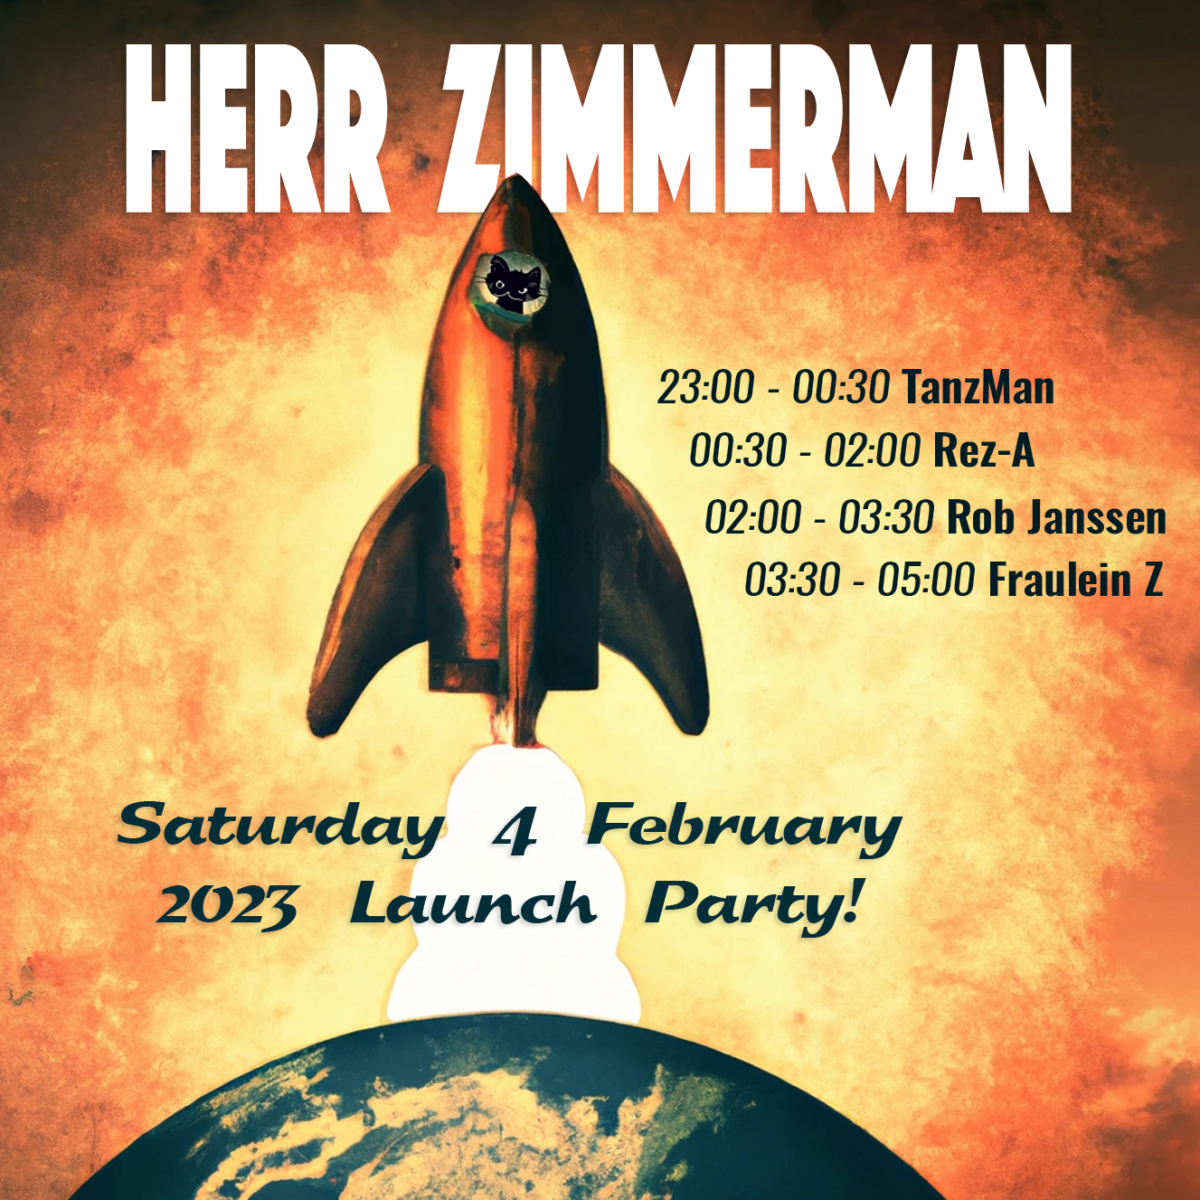 HERR ZIMMERMAN LAUNCH PARTY!